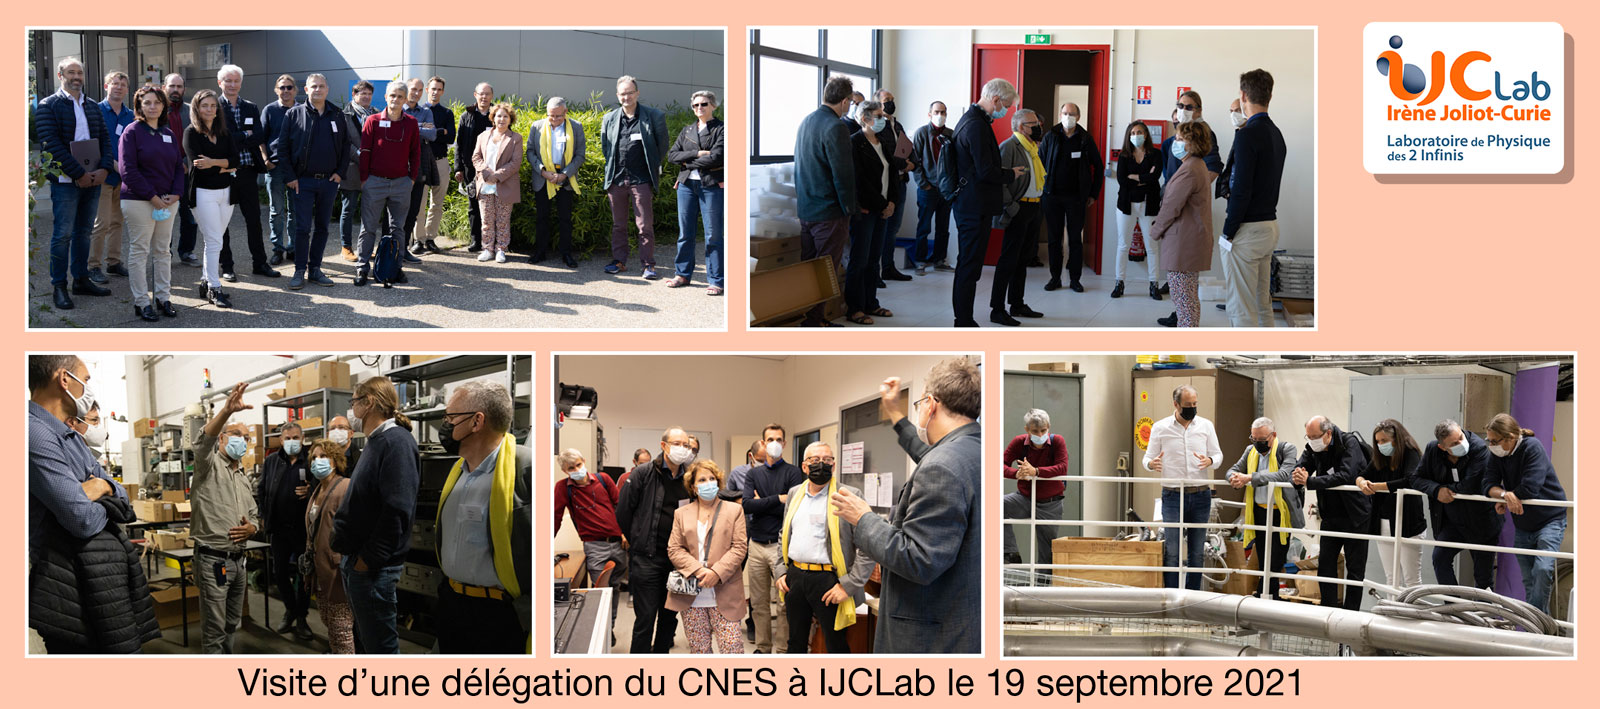 A CNES delegation visiting IJCLab